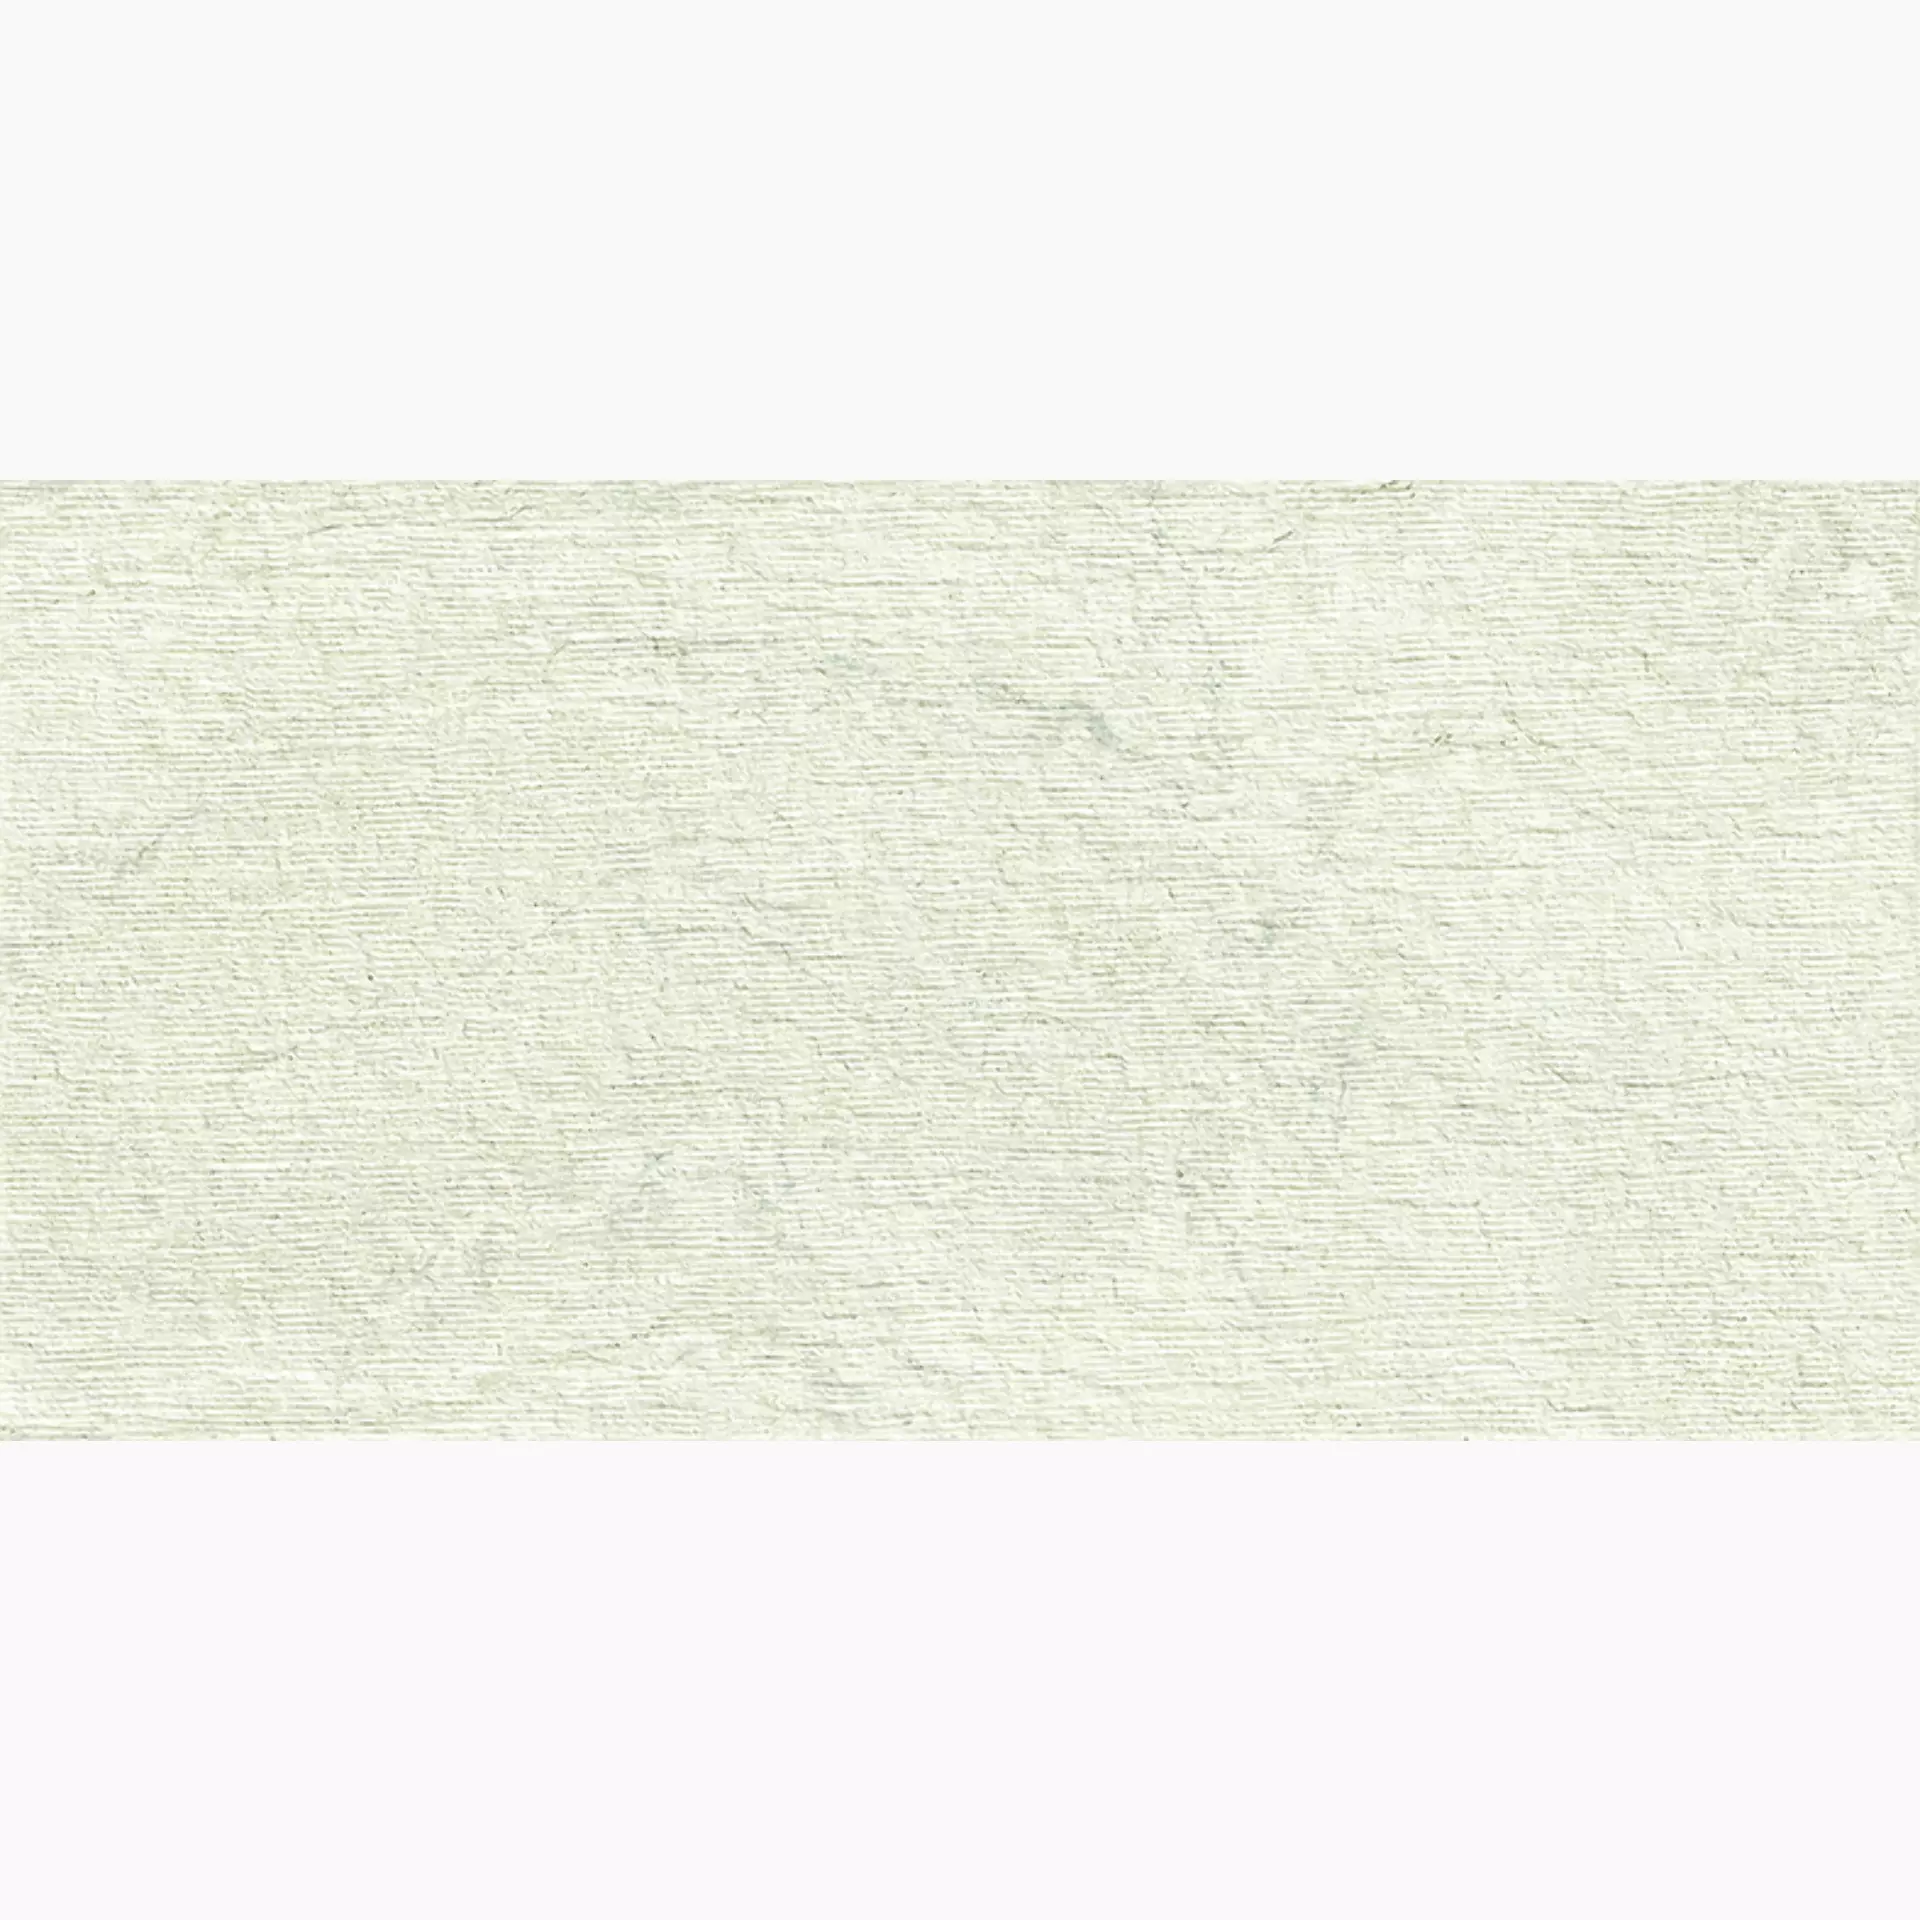 Provenza Unique Travertine Ruled White Naturale EJ91 60x120cm rectified 9,5mm